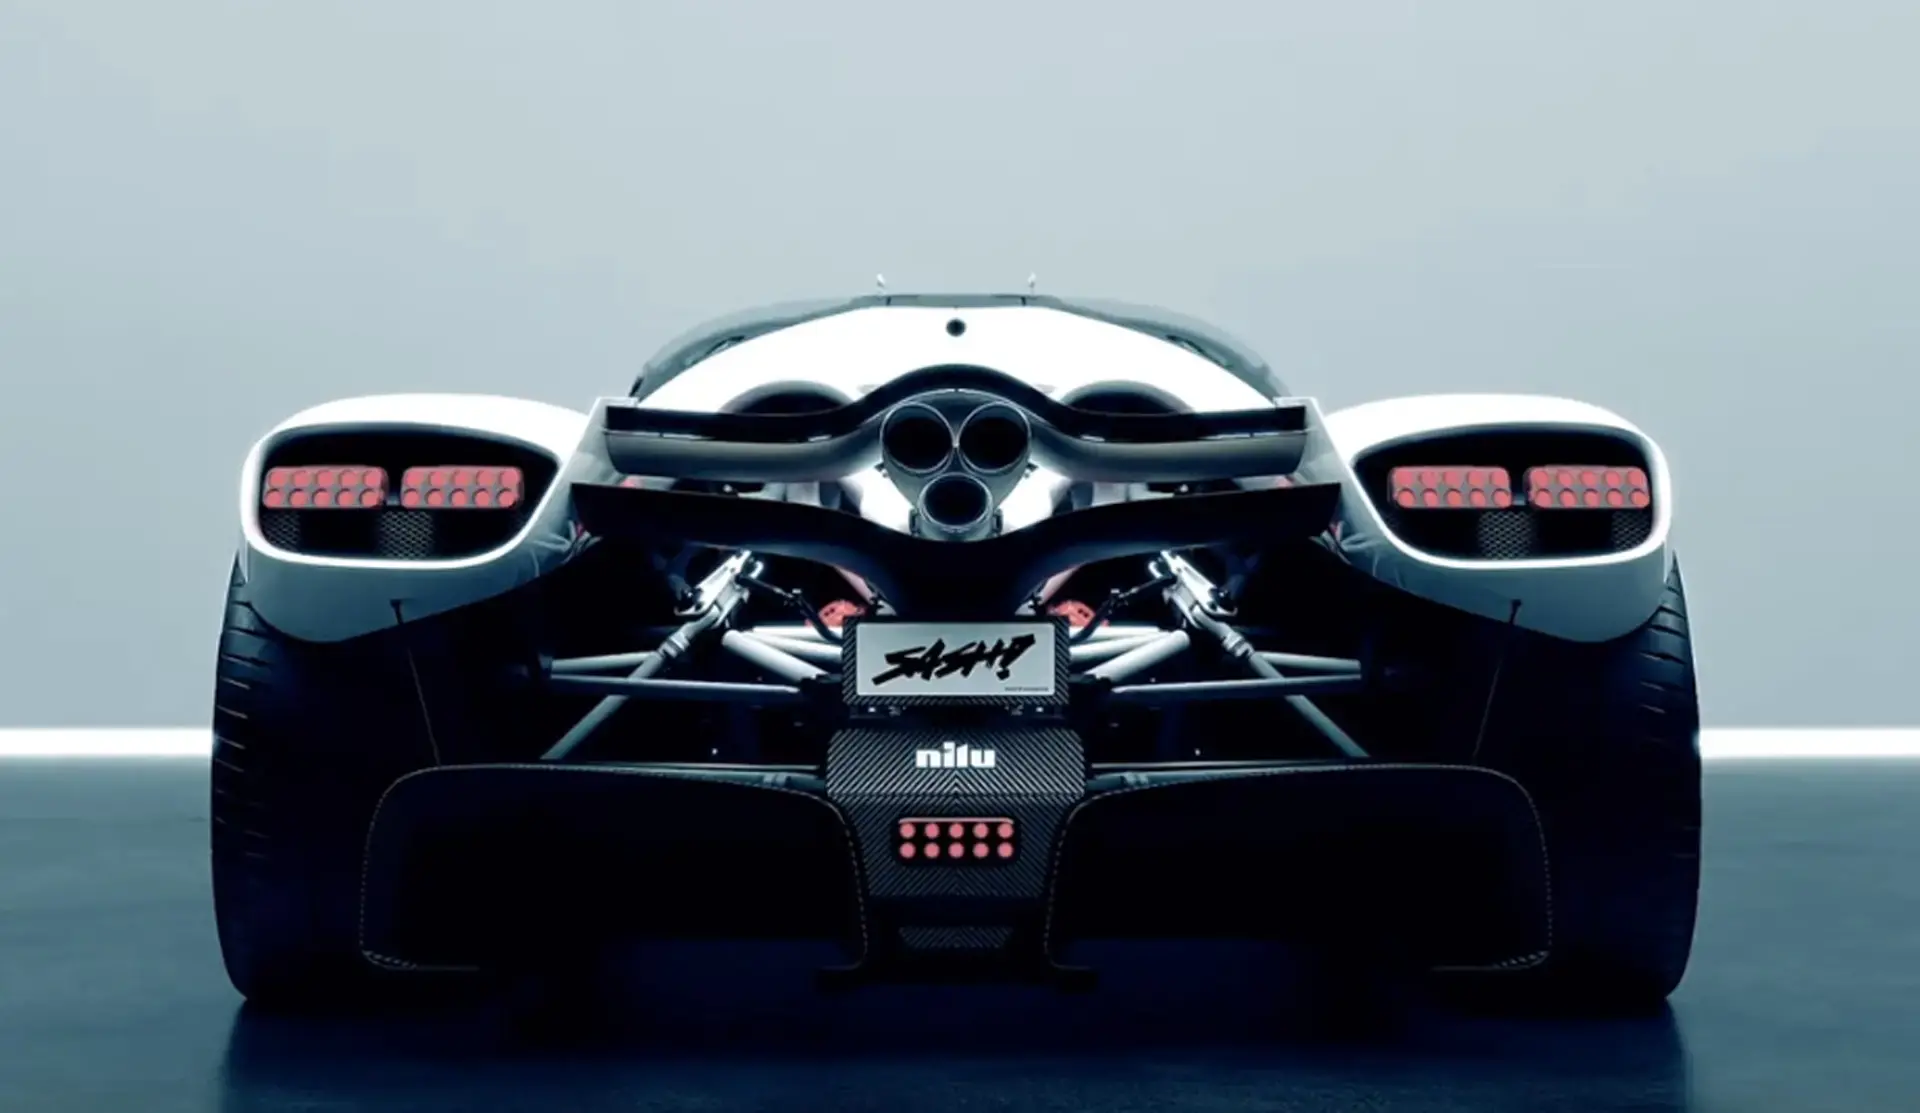 Renowned bugatti and koenigsegg designer teases new nilu hypercar